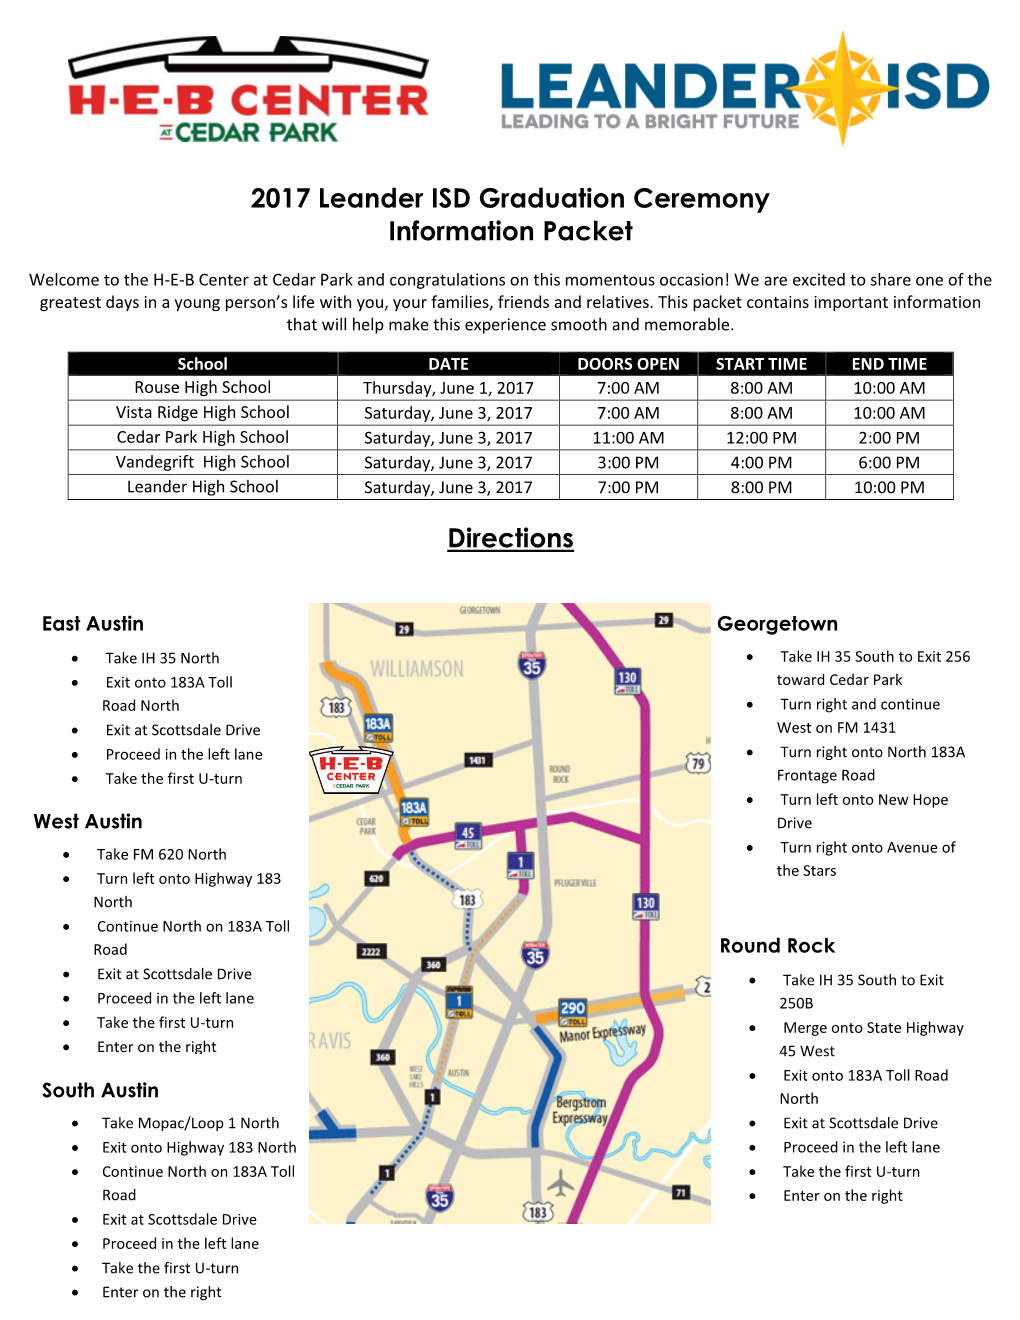 2017 Leander ISD Graduation Ceremony Information Packet